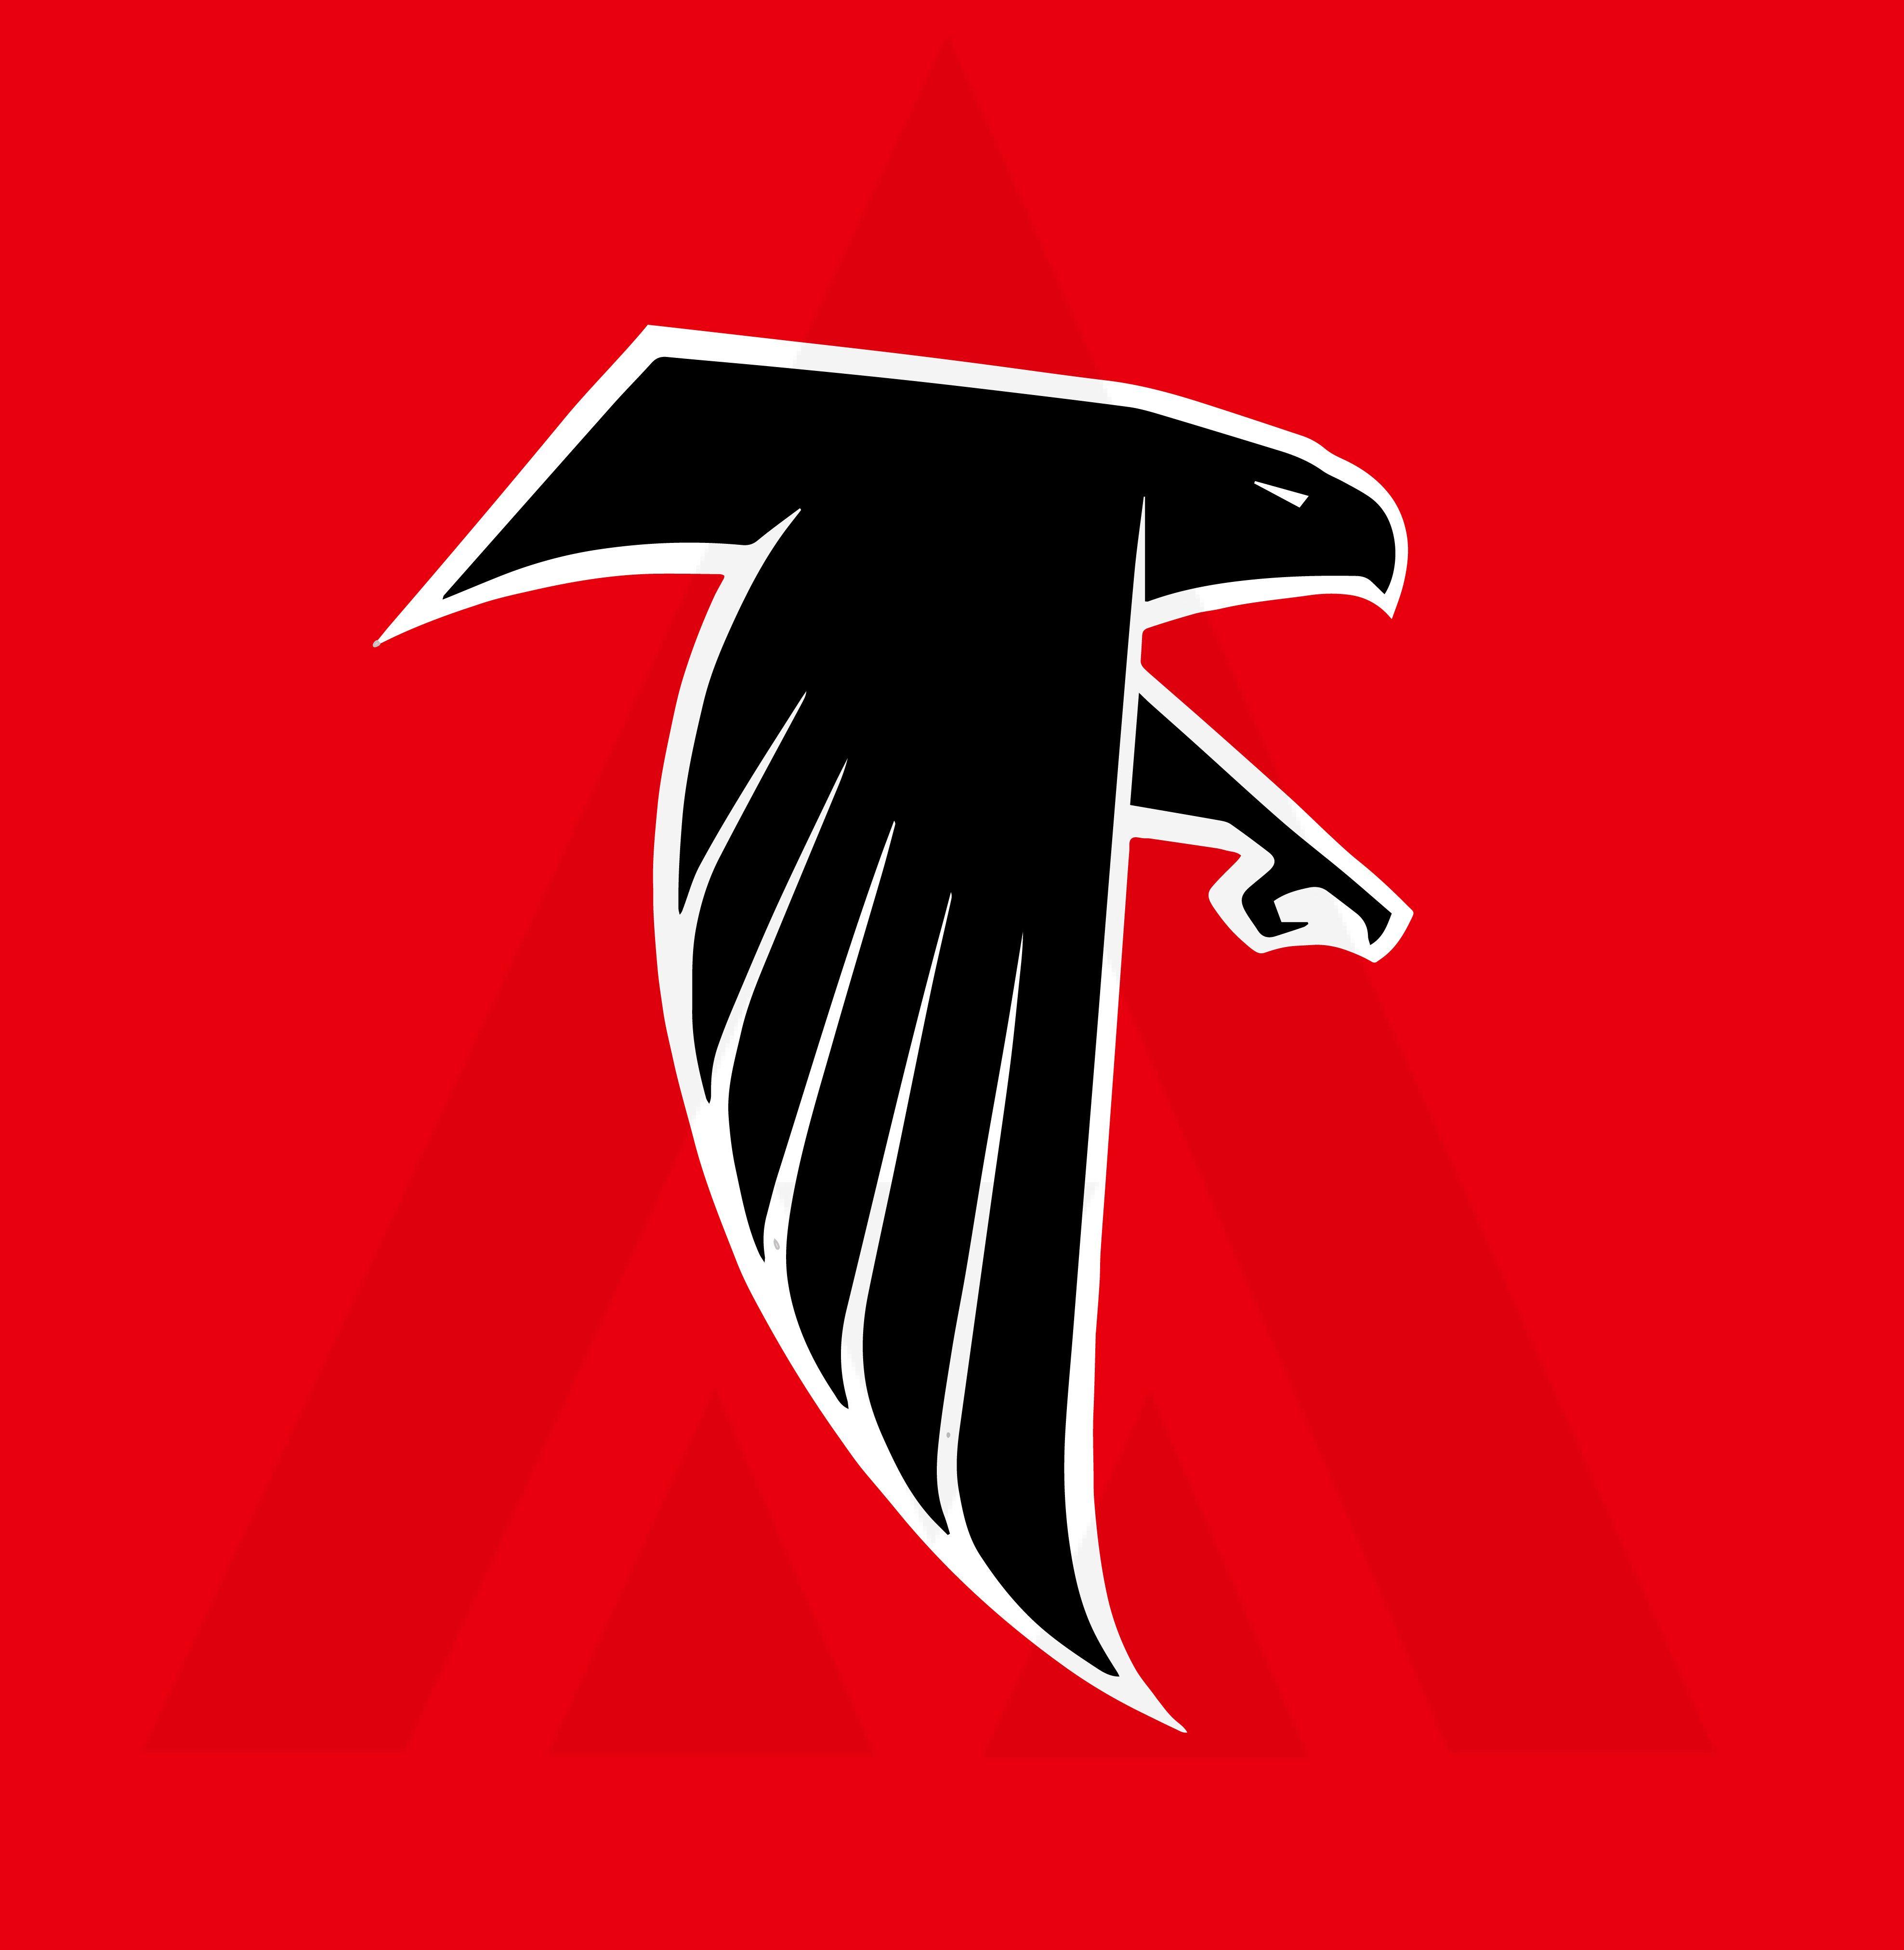 Atlanta Falcons Logo - Atlanta Falcons Logo Concept - Concepts - Chris Creamer's Sports ...